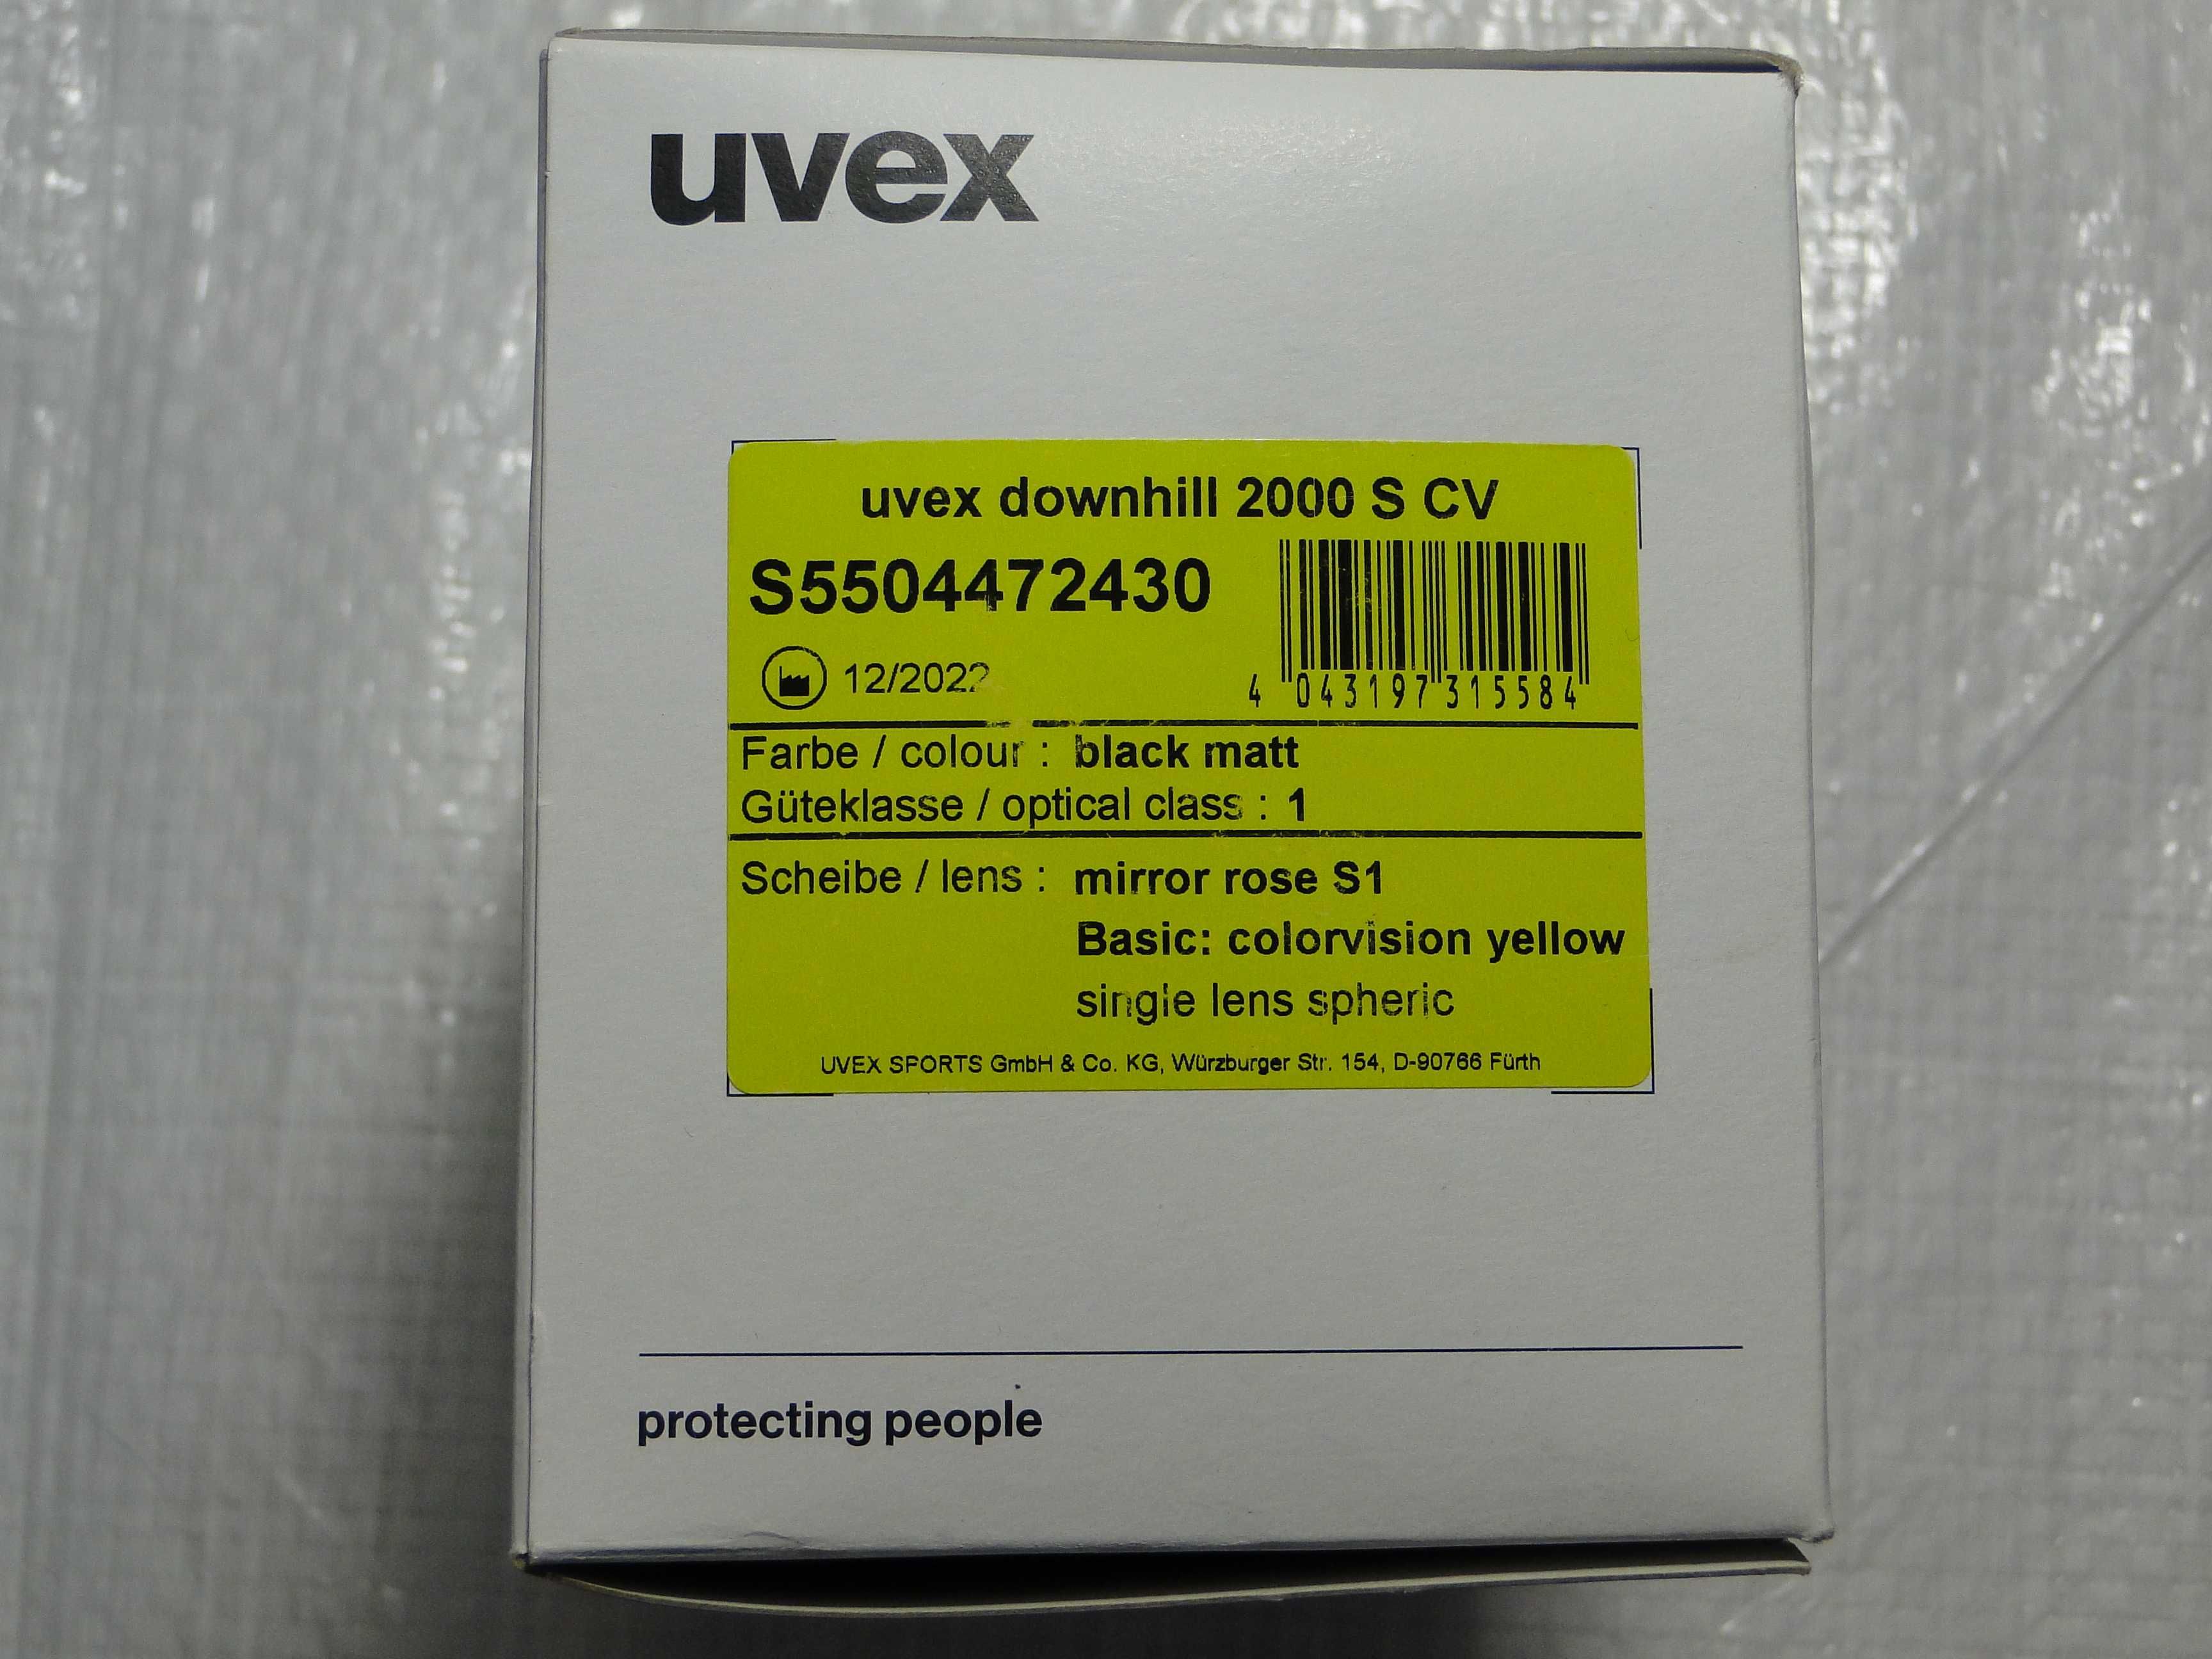 Gogle Uvex Downhill 2000 S CV - 55/0/447/2430